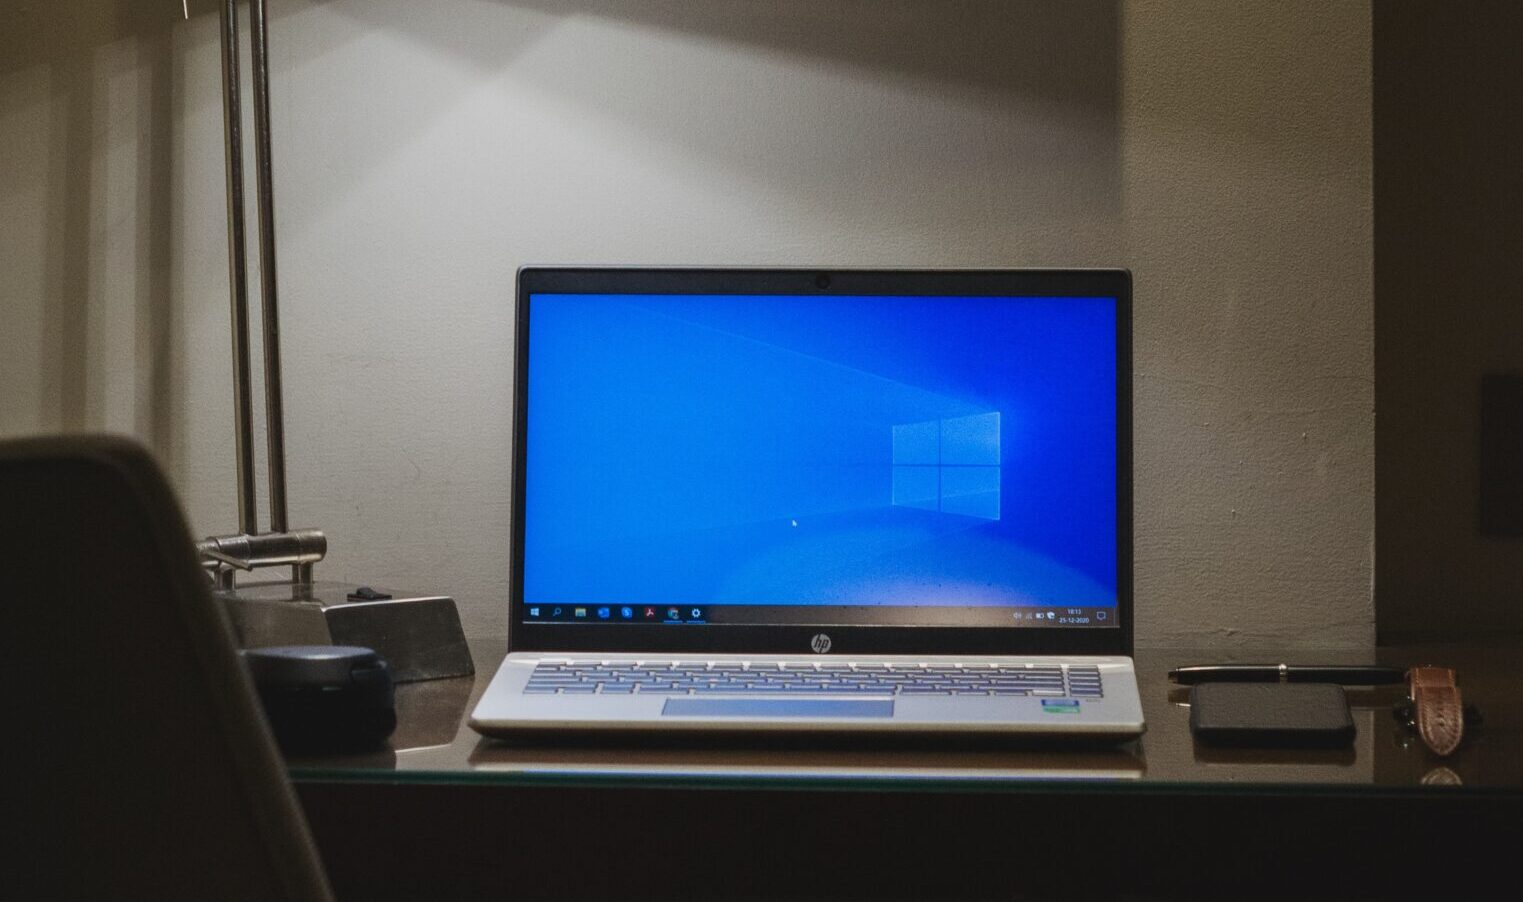 Windows 10 Stuck On The Blue Screen